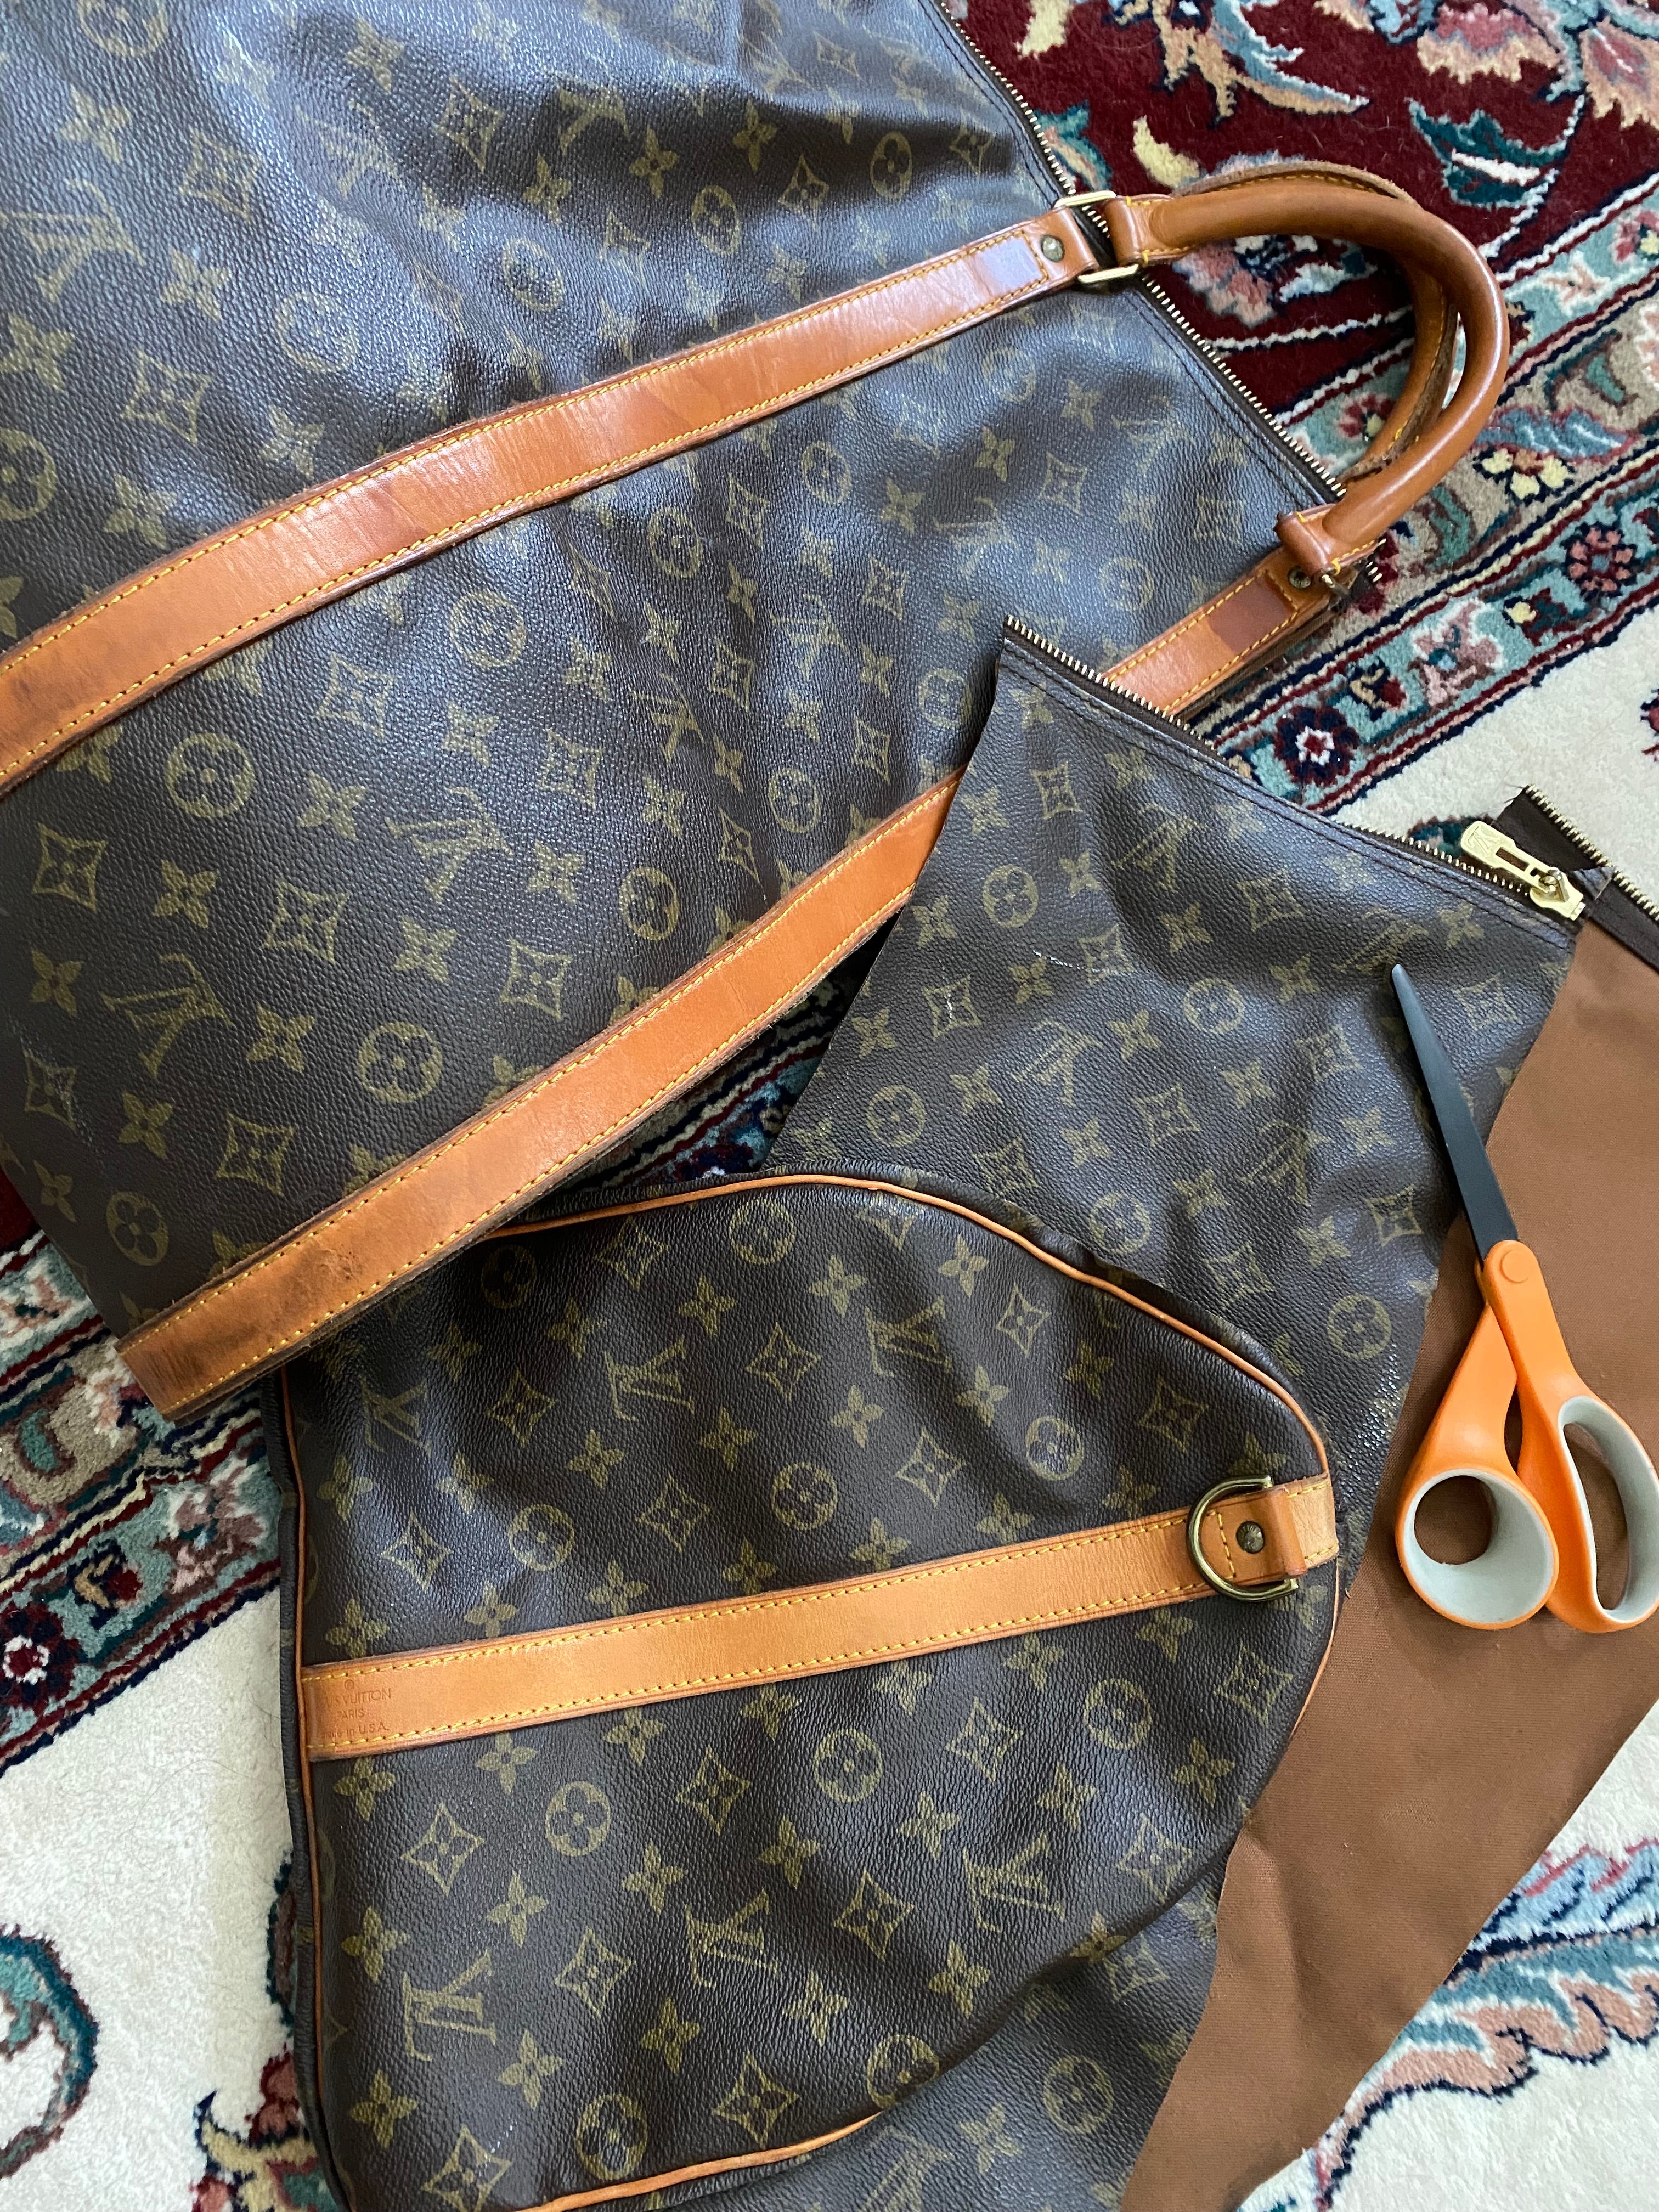 Best Repurposed Louis Vuitton Handbags and LV Purses